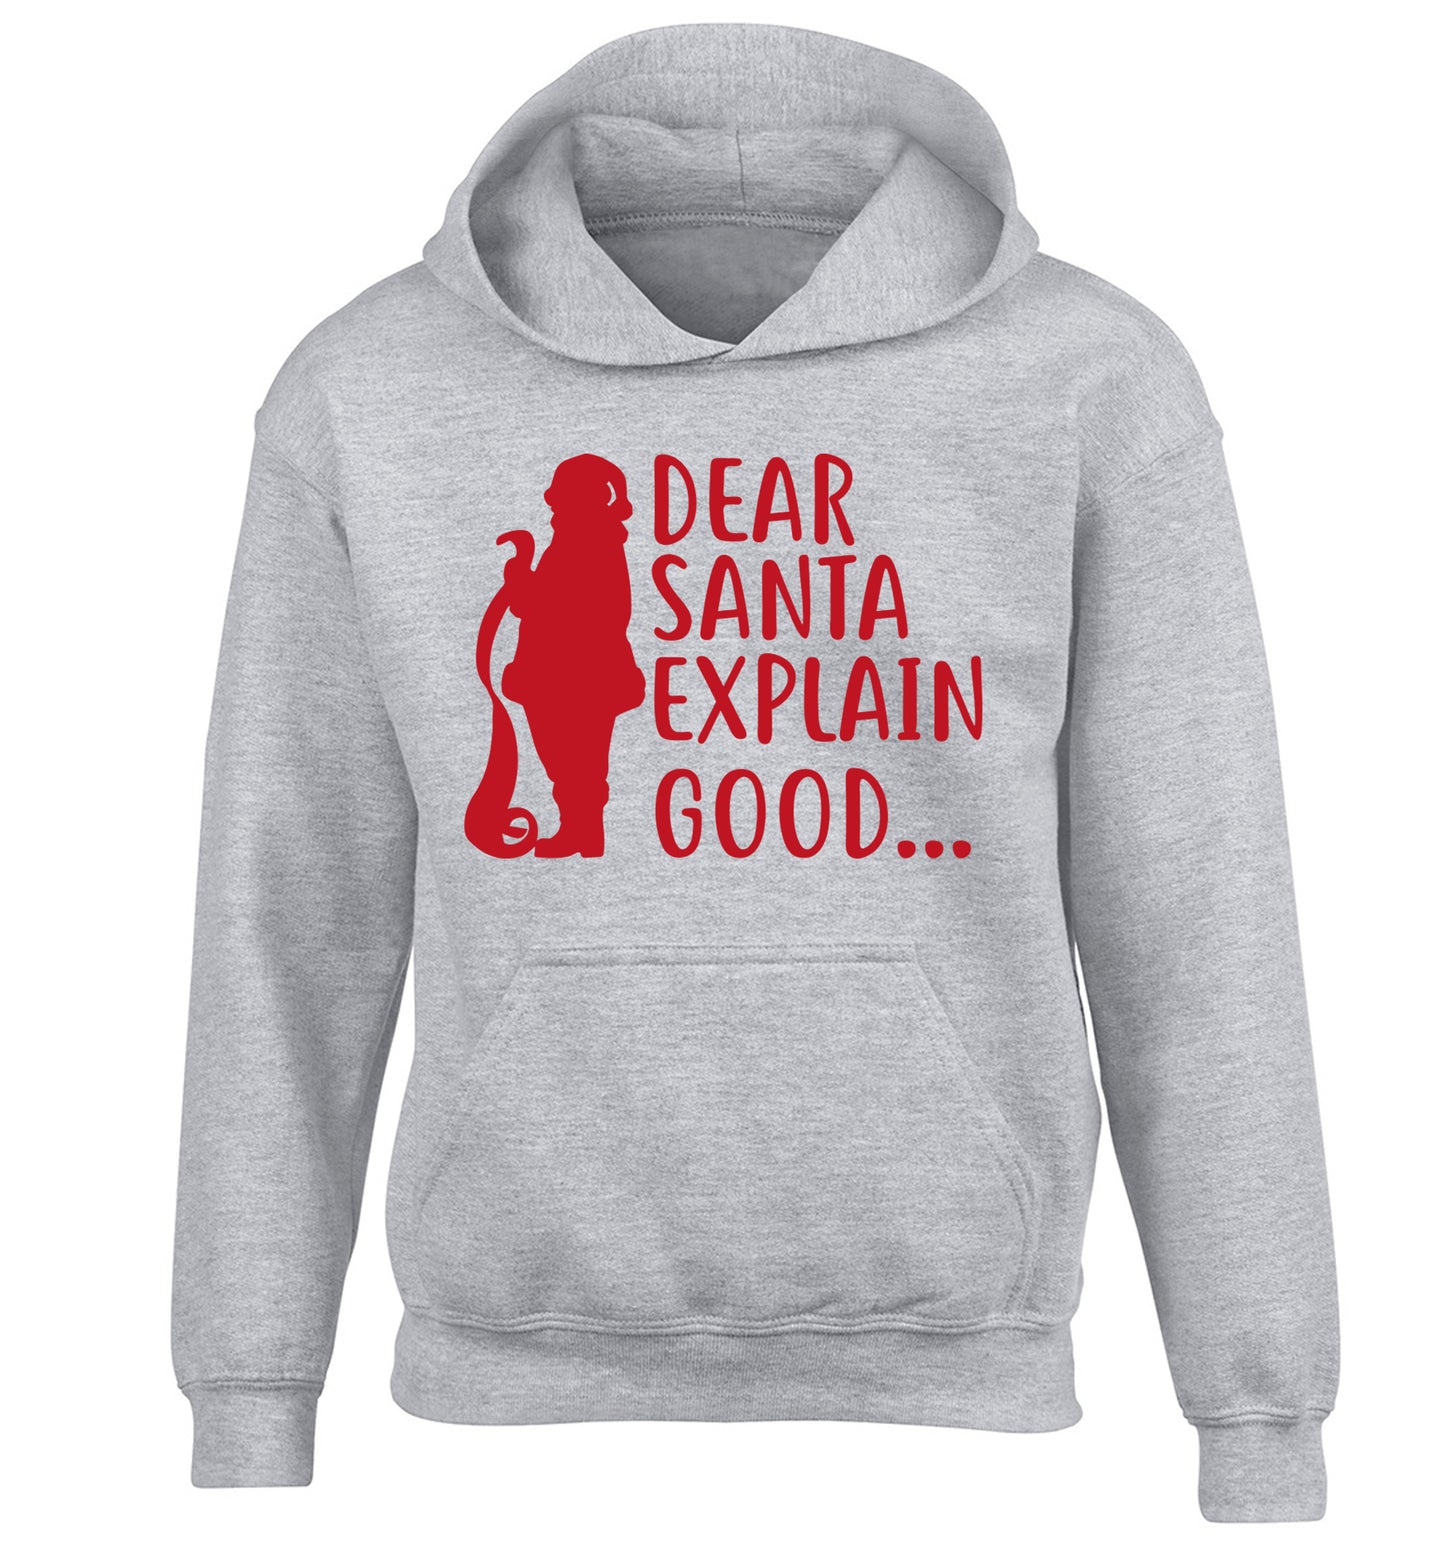 Dear Santa explain good... children's grey hoodie 12-13 Years